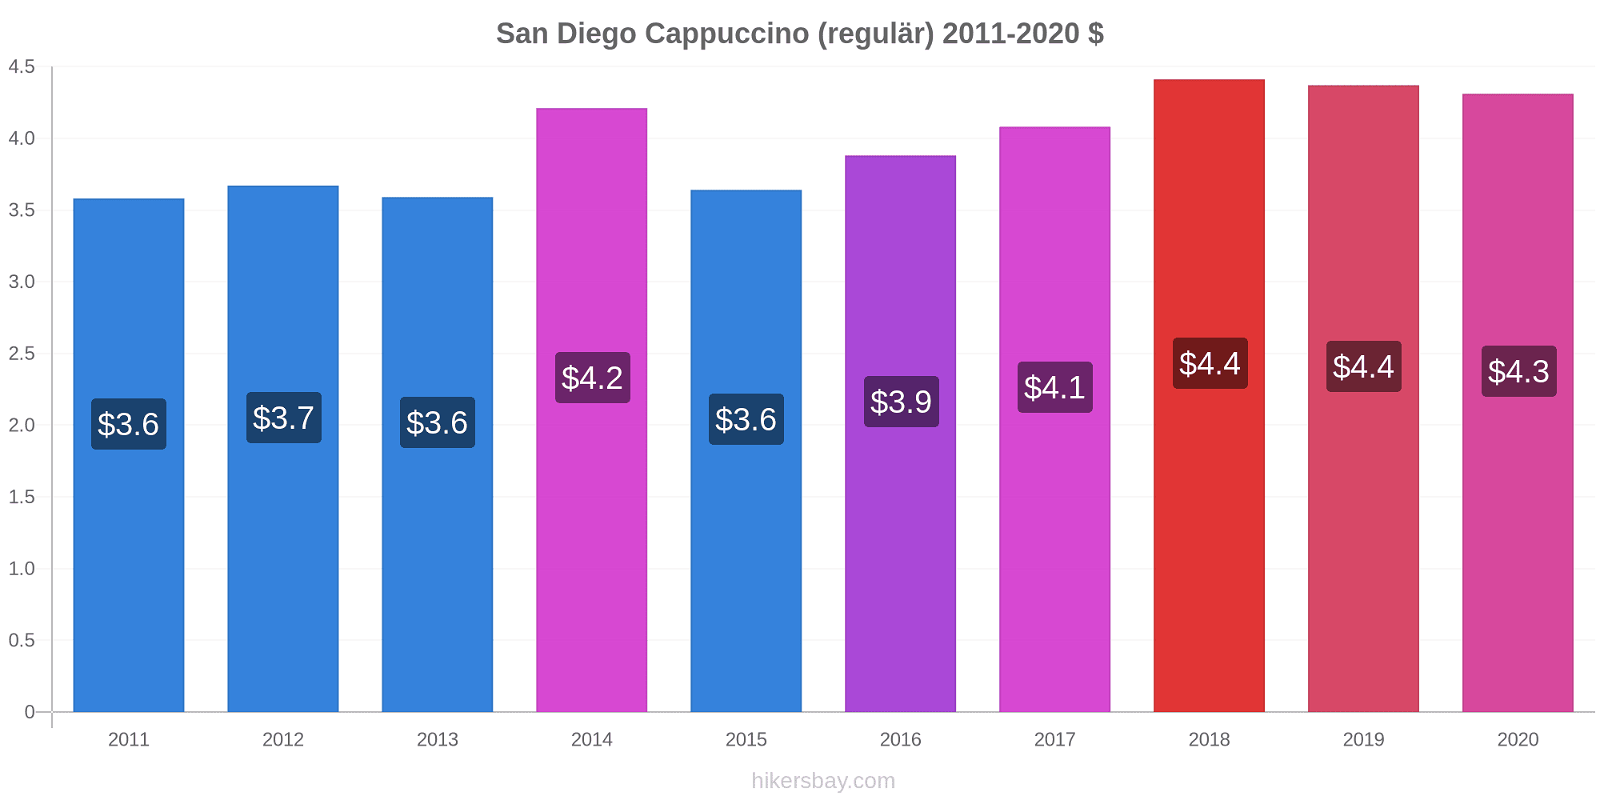 San Diego Preisänderungen Cappuccino (regulär) hikersbay.com